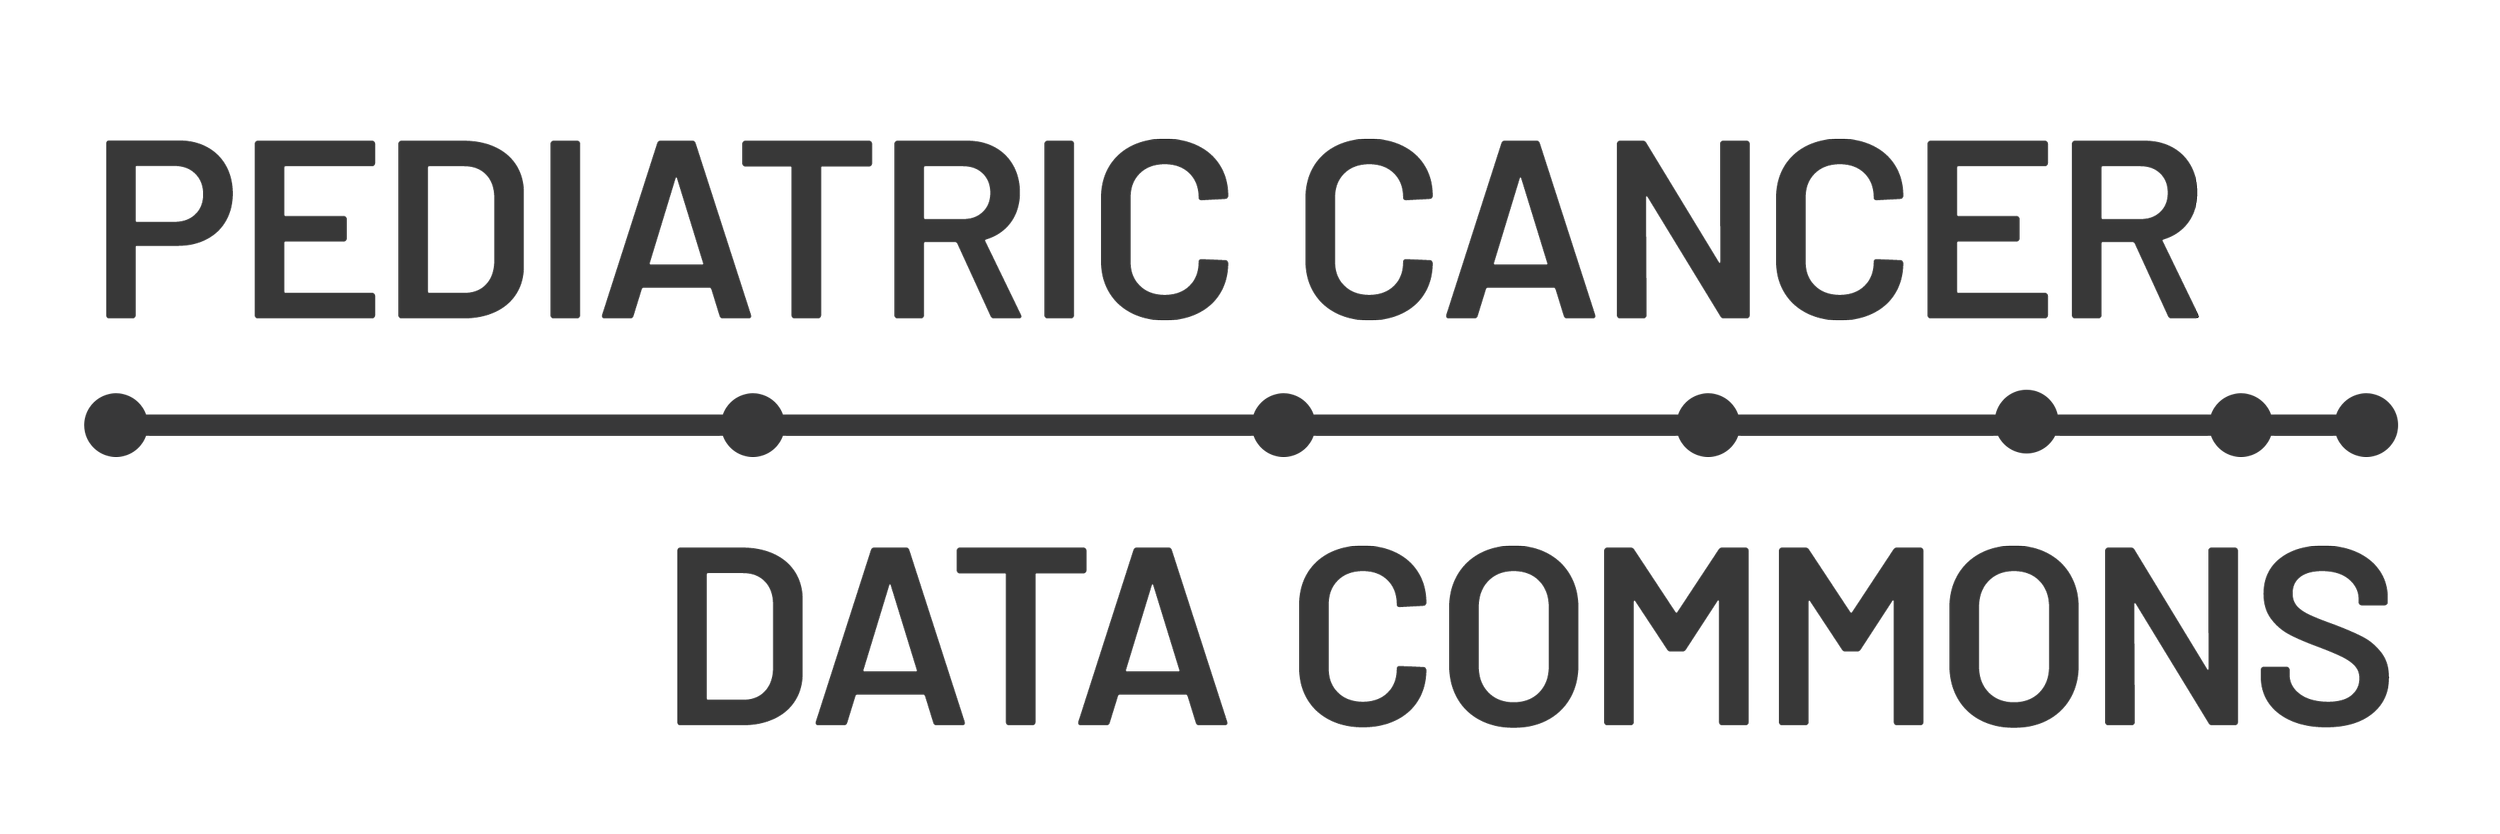 pcdc logo - gray.png